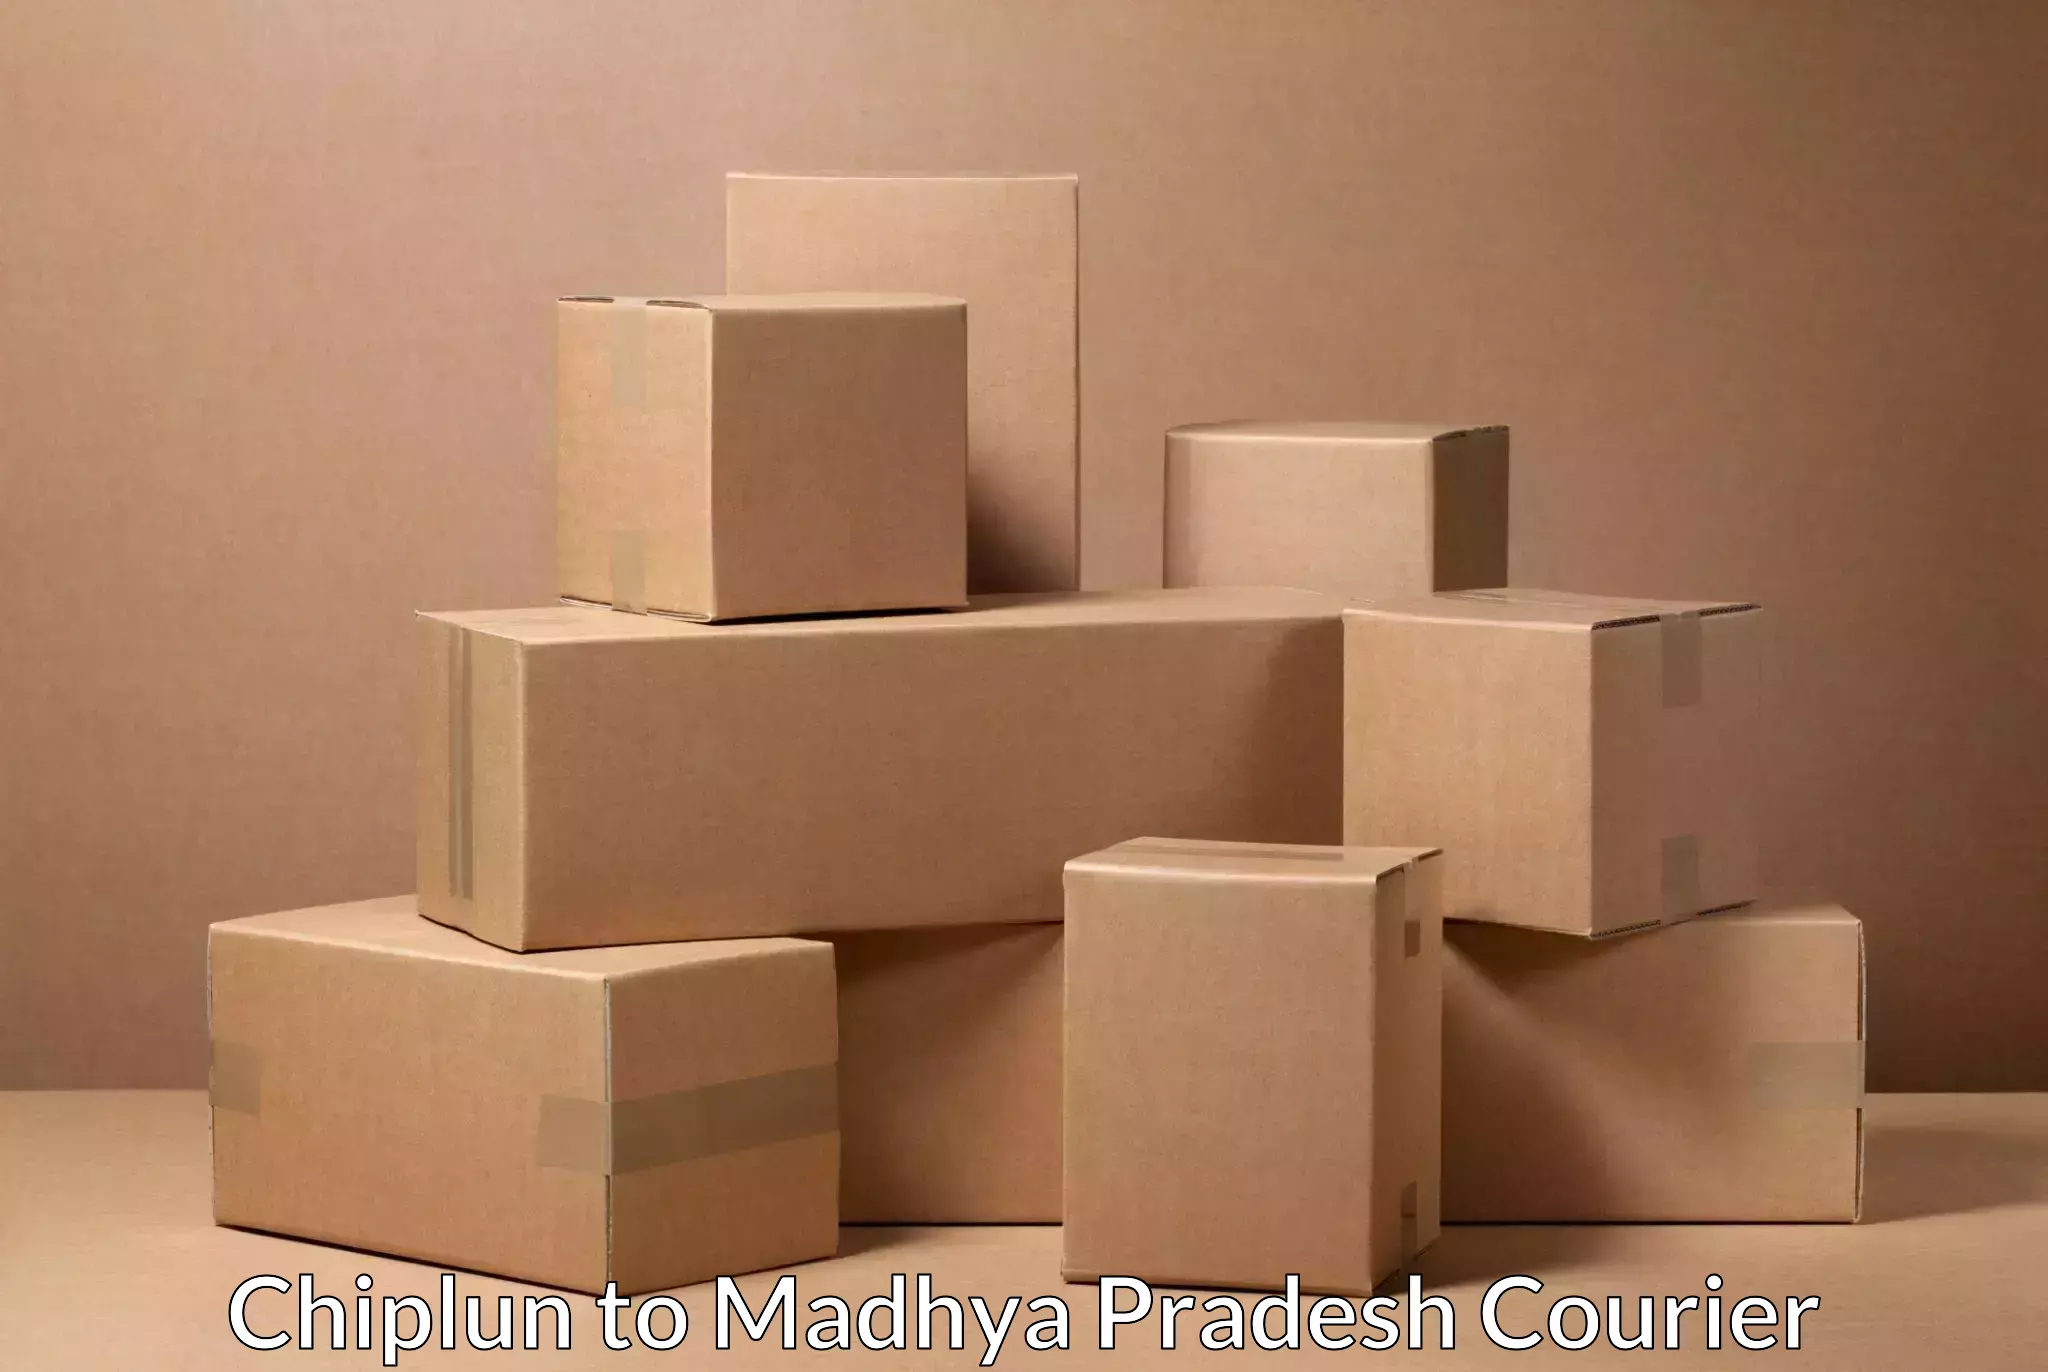 Express package handling in Chiplun to Madhya Pradesh